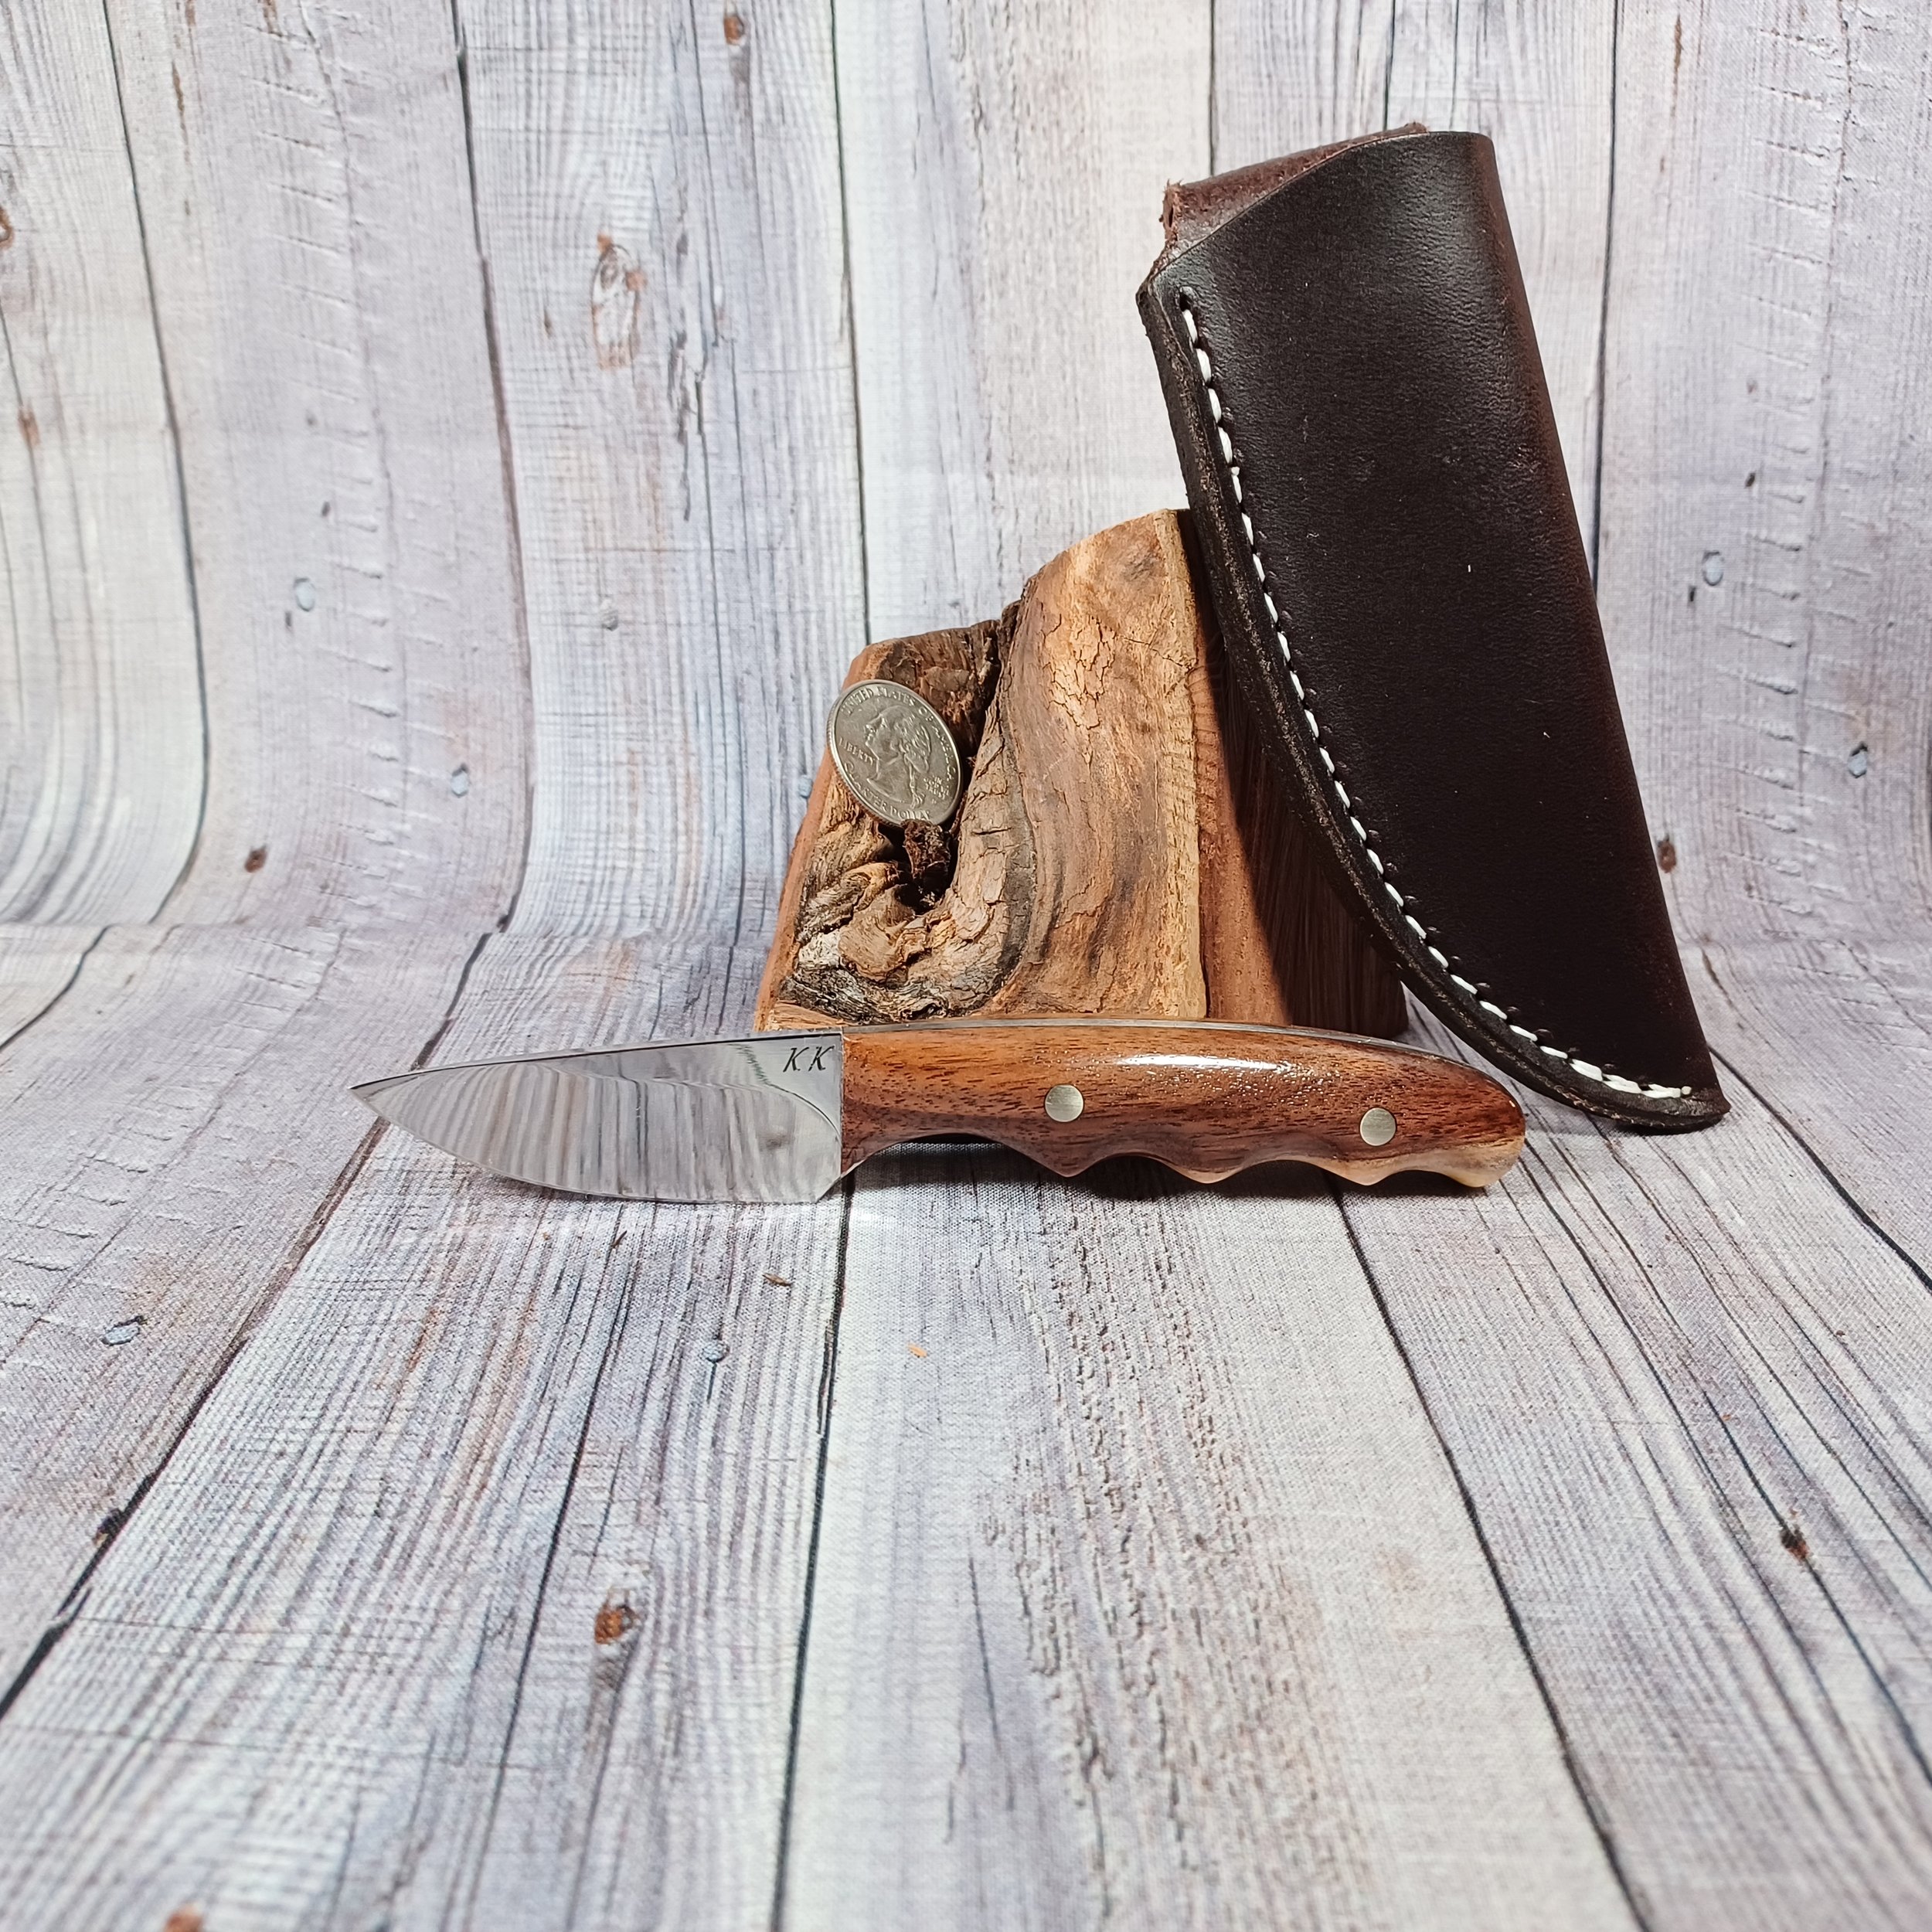  2 1/4” UC blade, Myrtle wood scales 